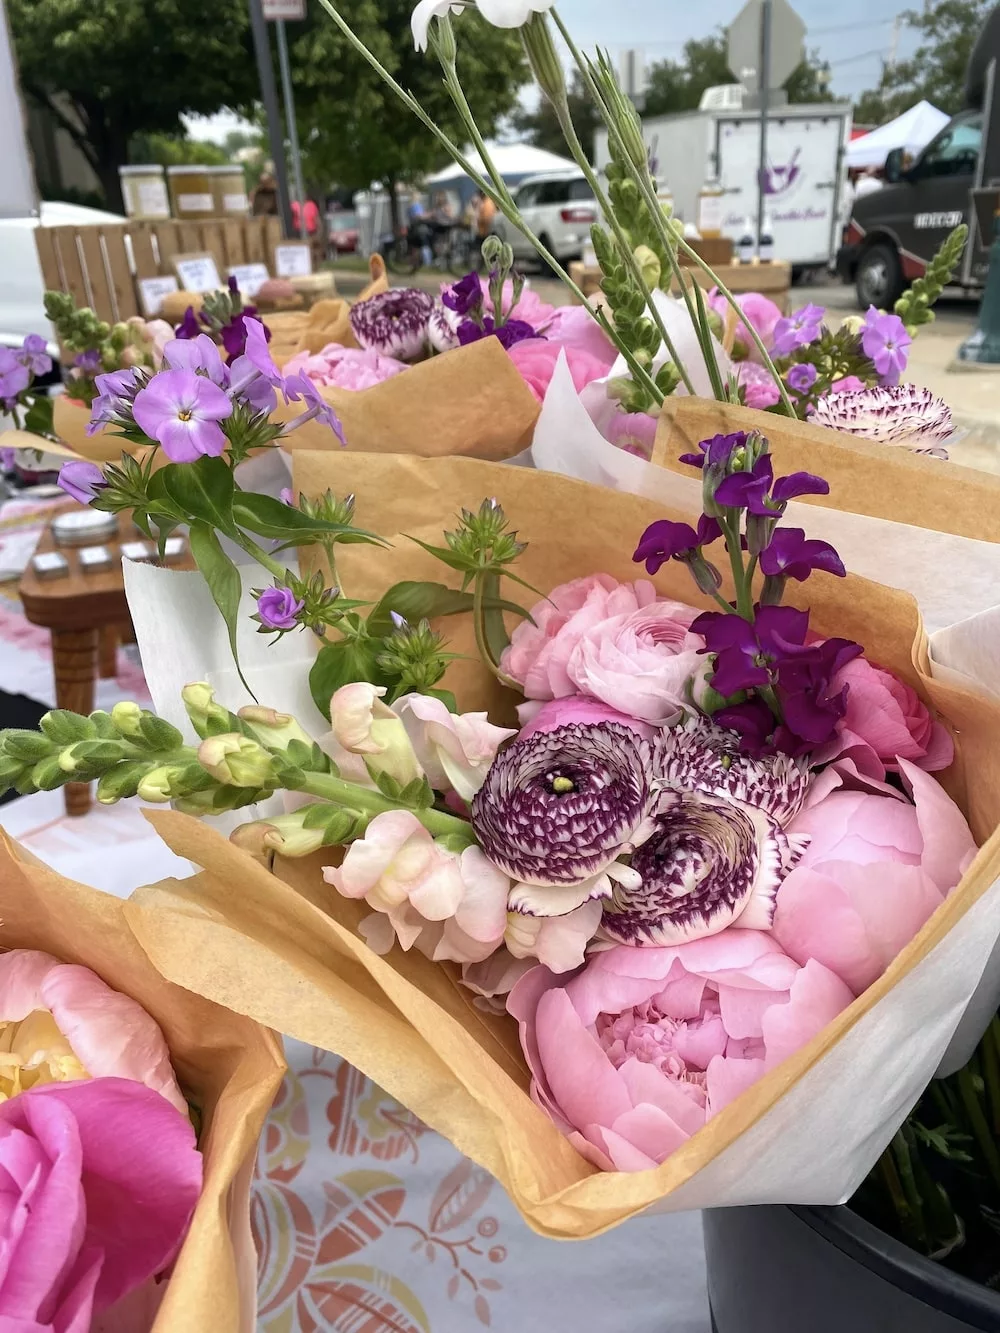 Bouquets of pink and purple flowers at Cedar Falls Farmers' Market in Cedar Falls, Iowa